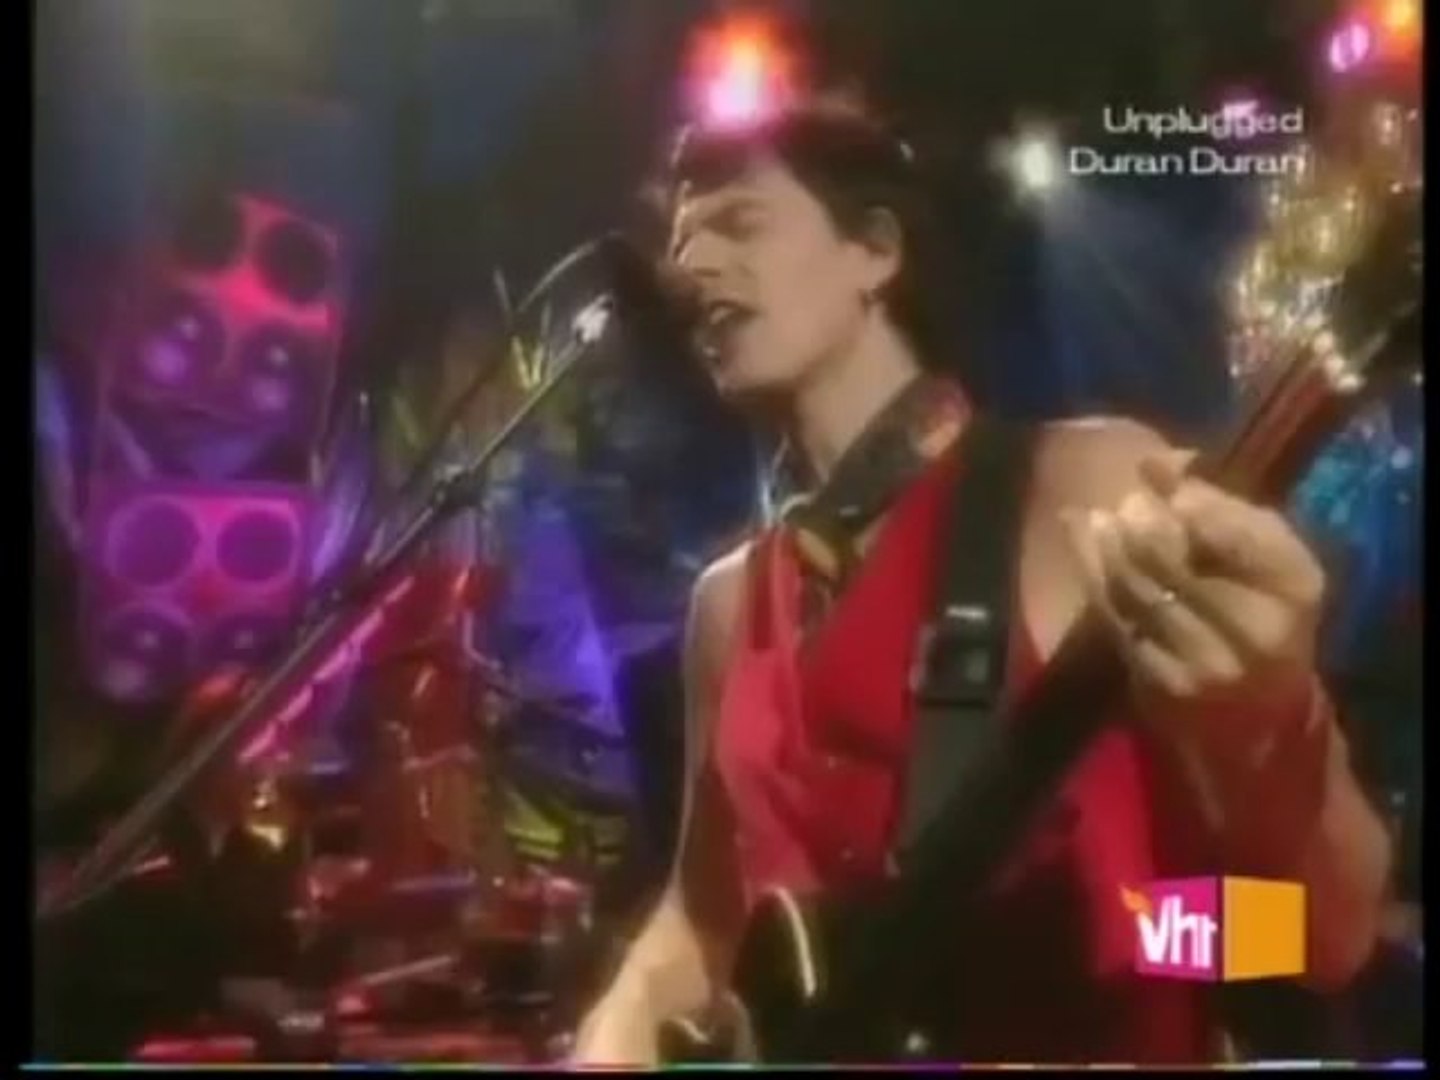 Duran Duran on MTV